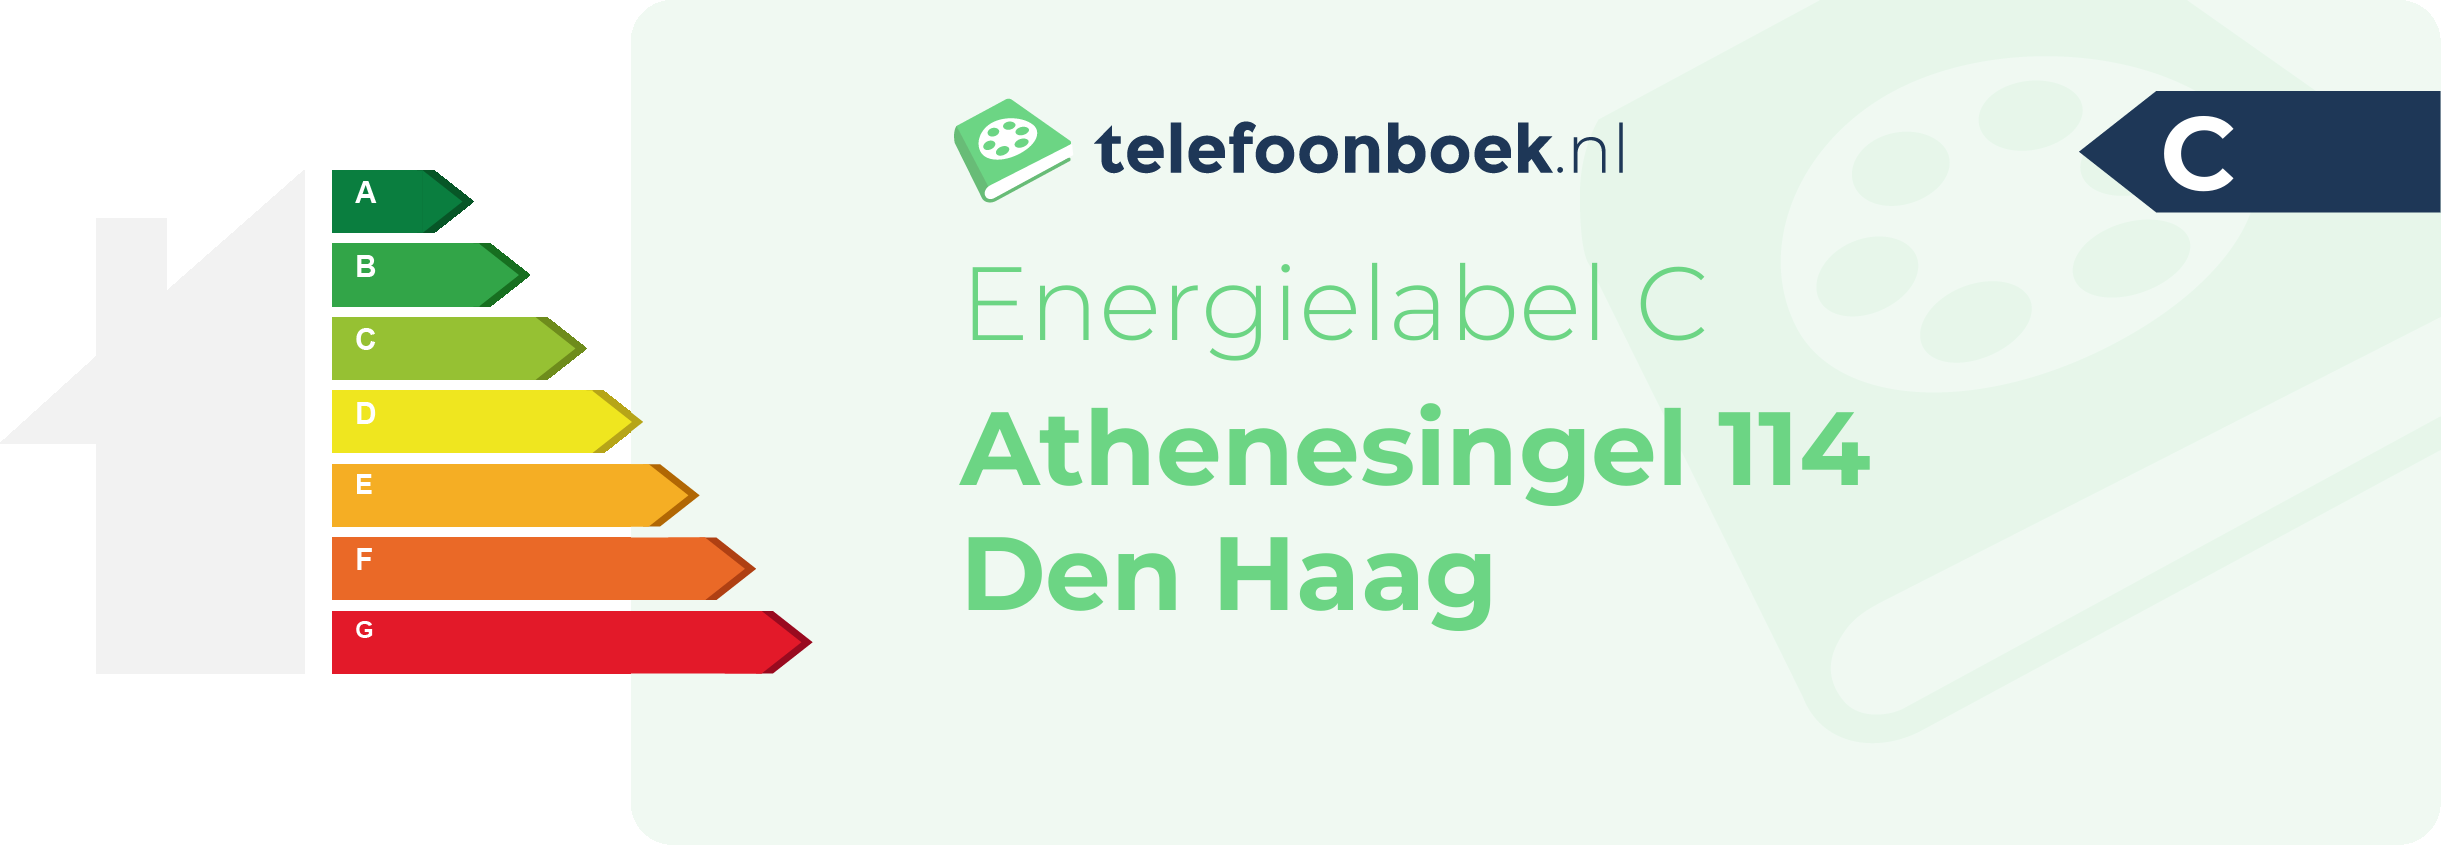 Energielabel Athenesingel 114 Den Haag